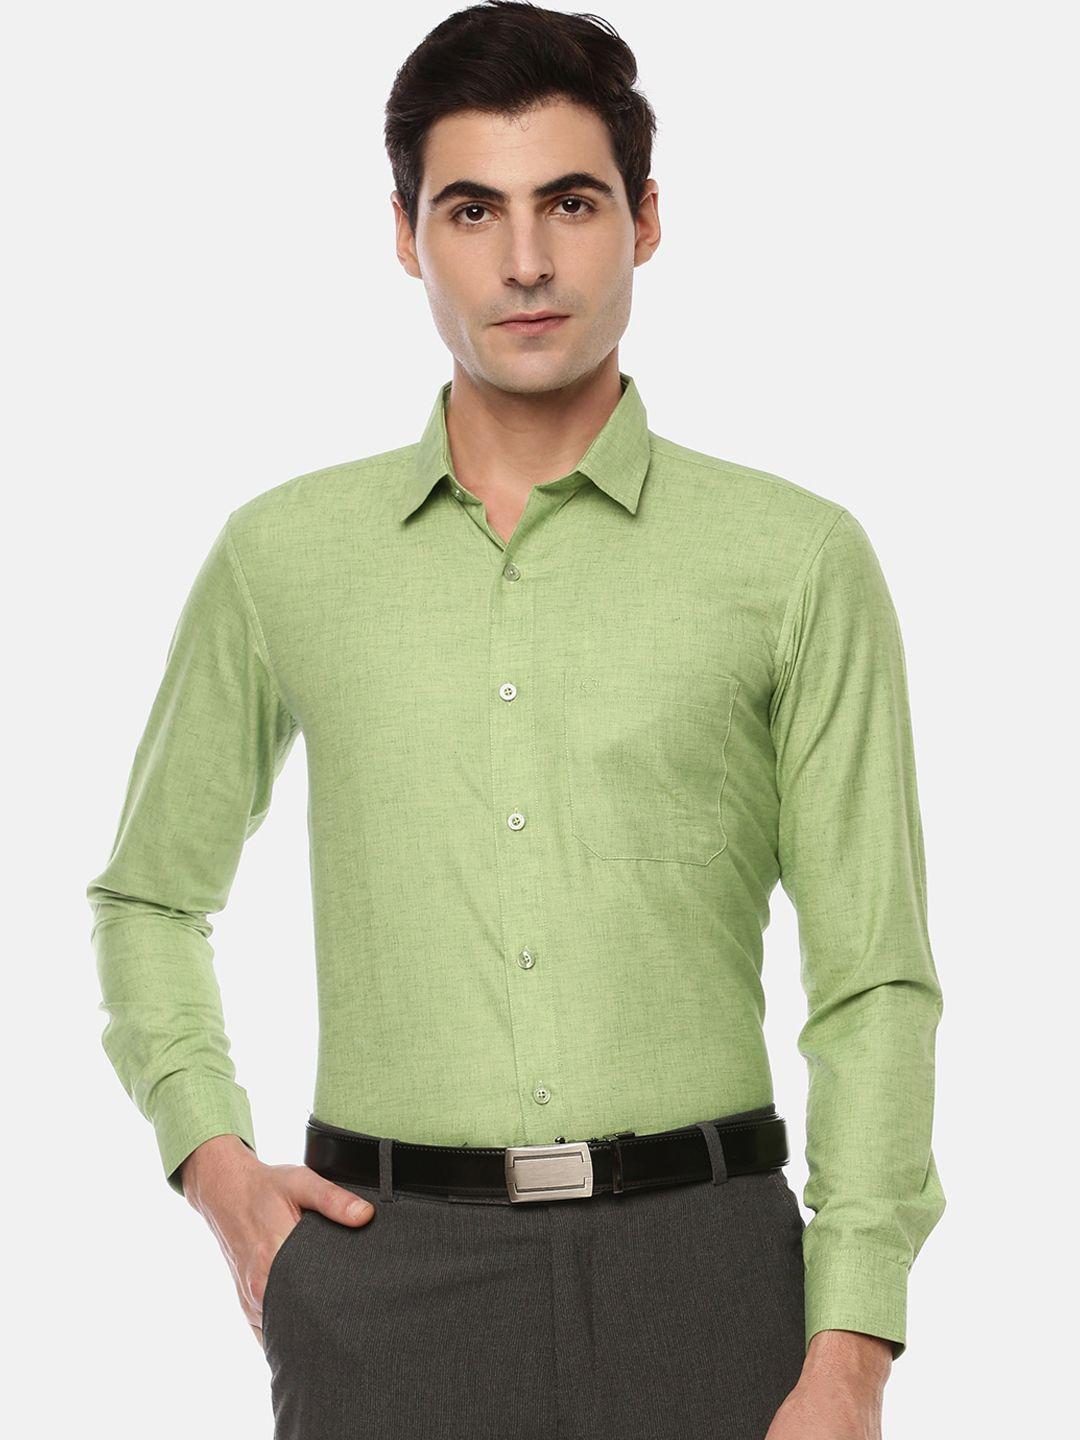 jansons men green cotton formal shirt